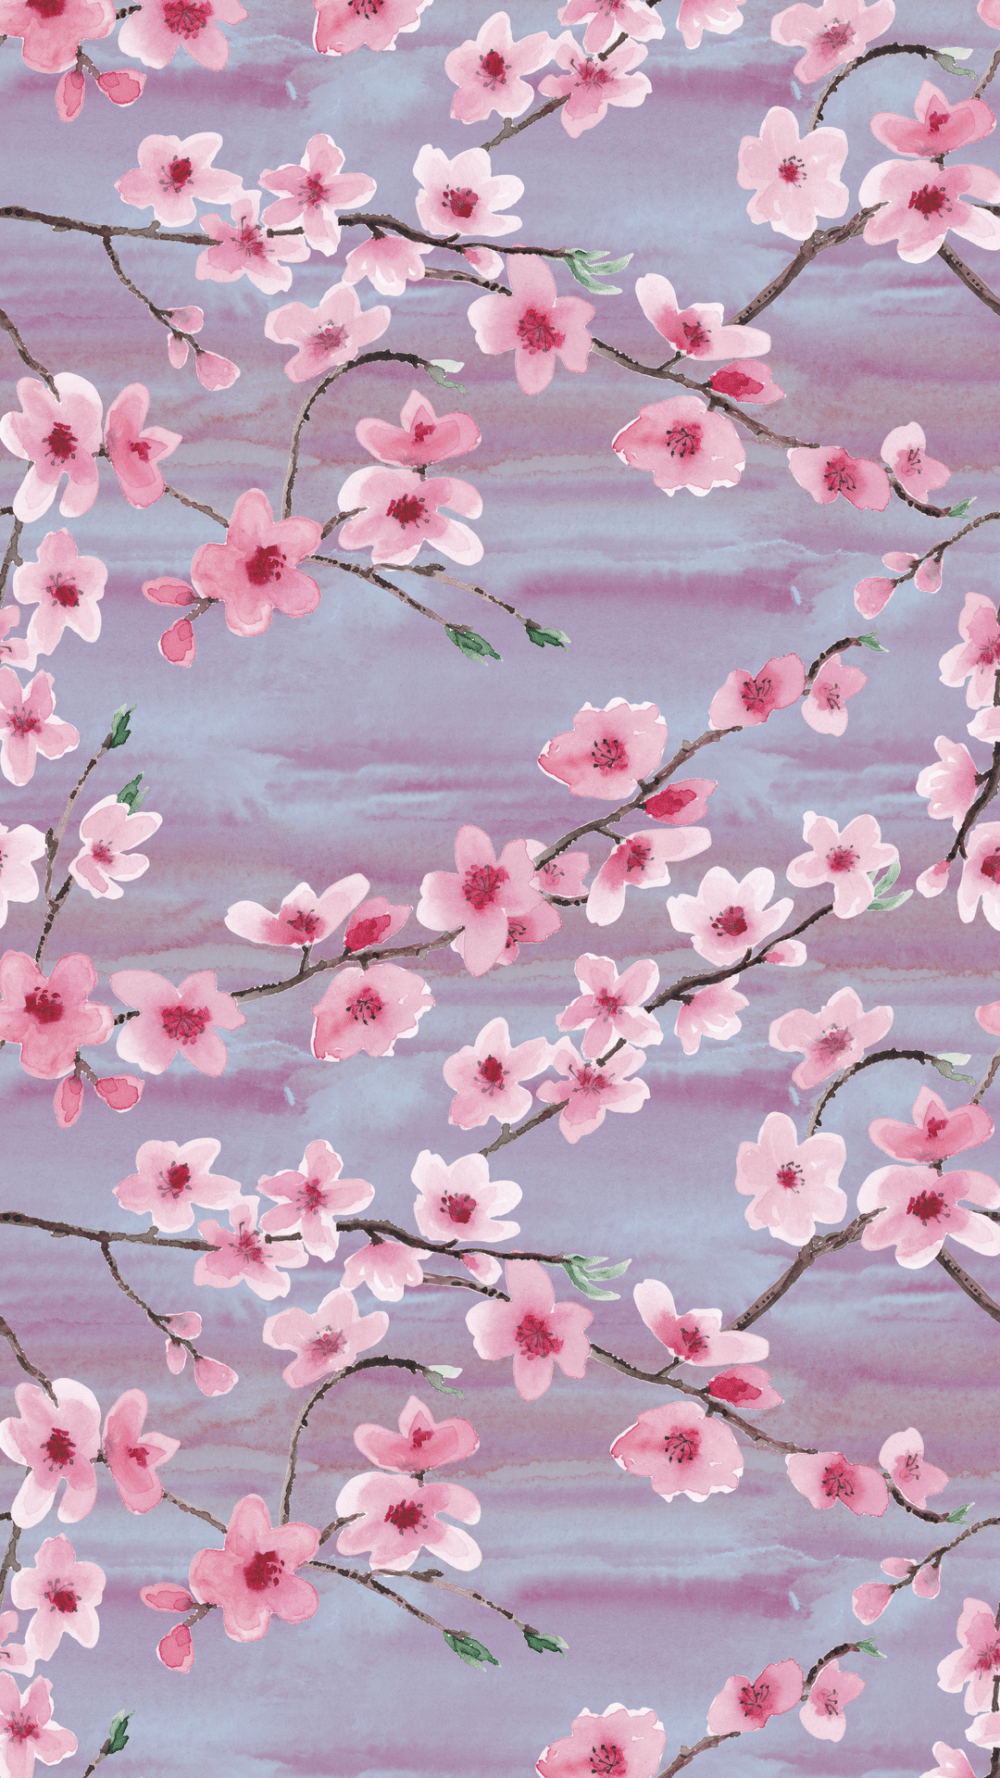 May Smart Phone Wallpaper. Cherry blossom